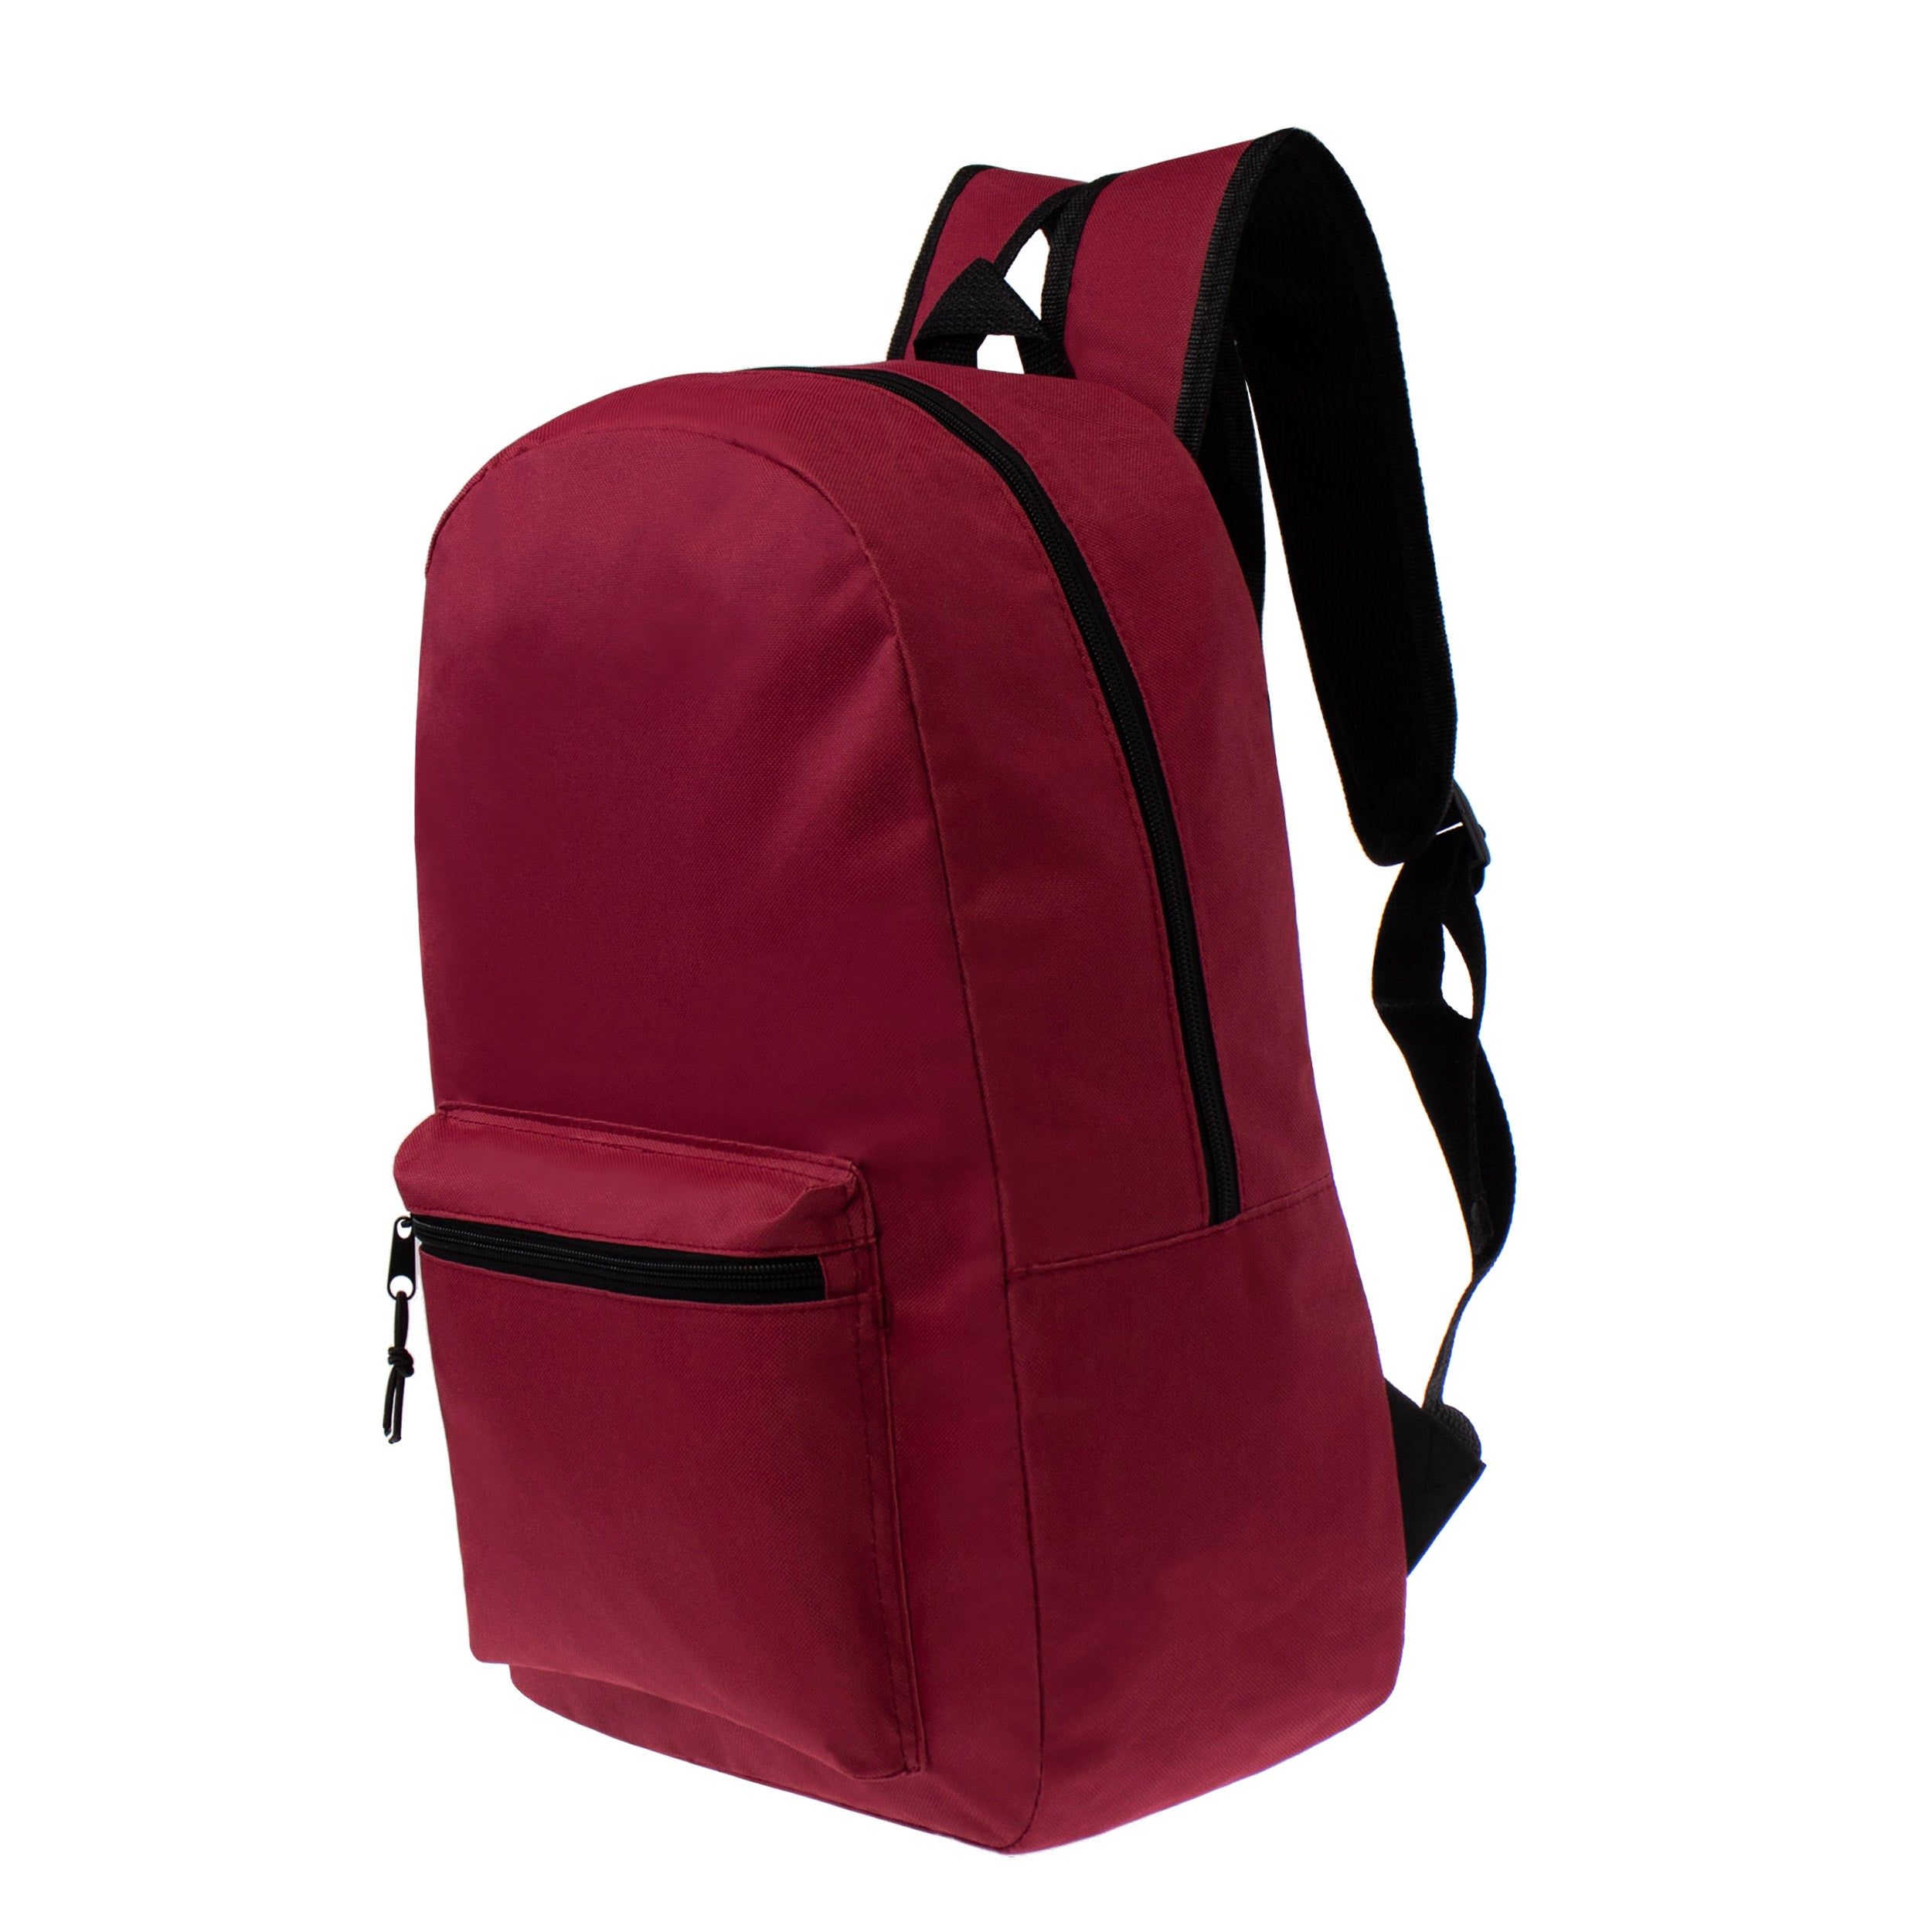 17" Kids Basic Wholesale Backpack in 6 Colors - Bulk Case of 24